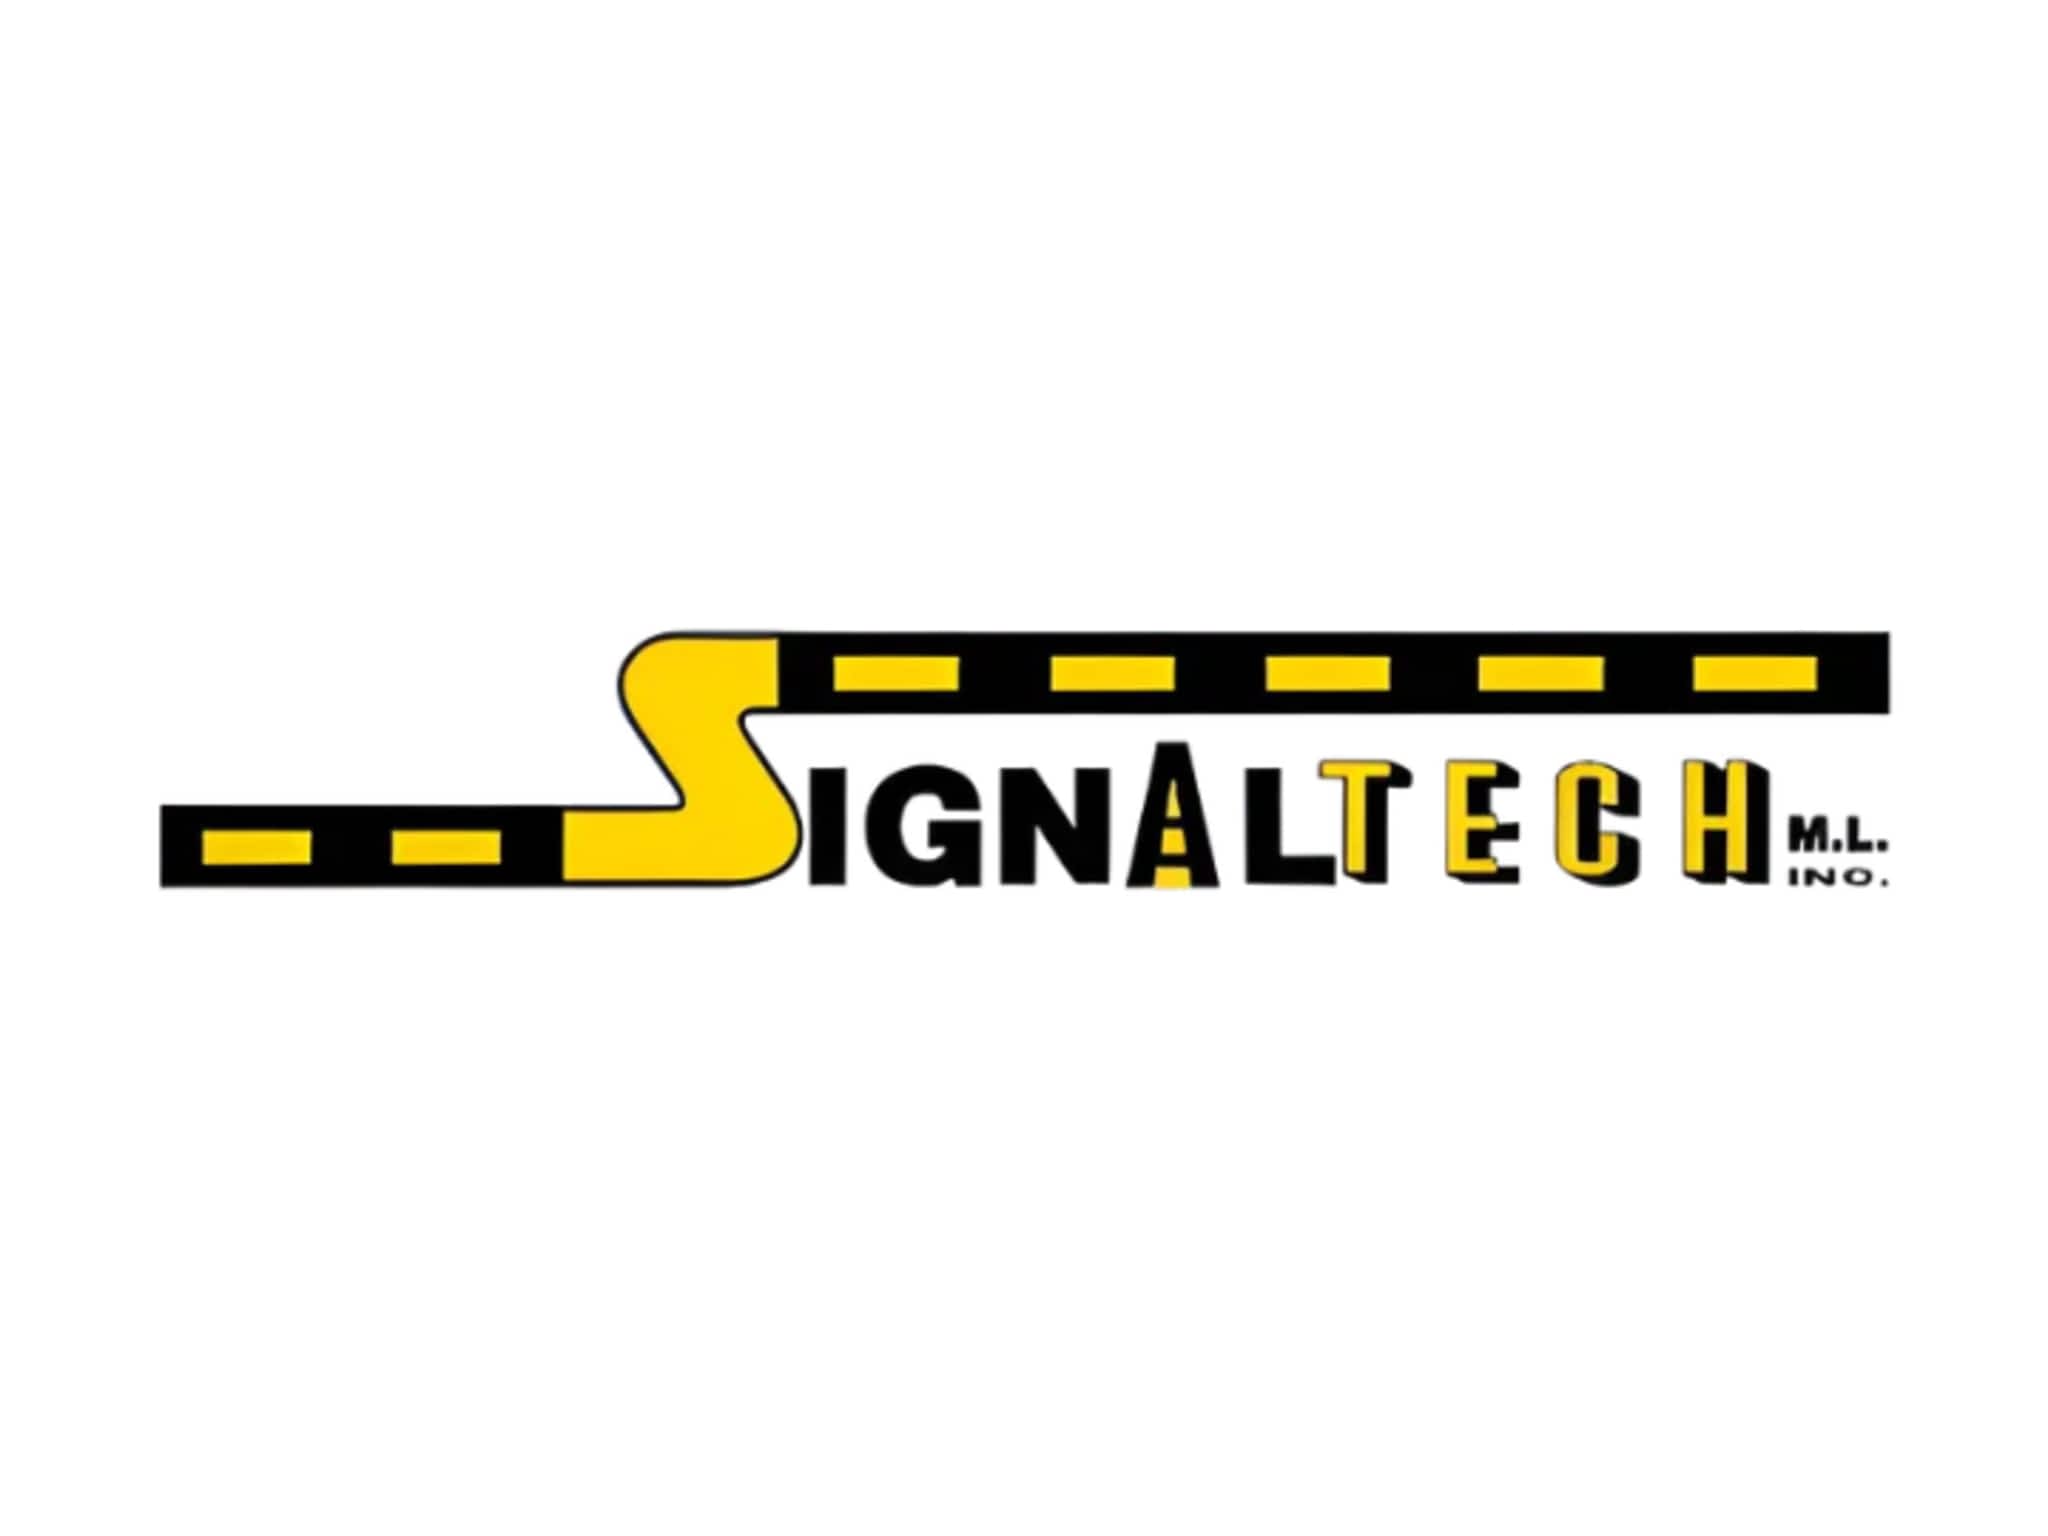 photo Signaltech M L Inc